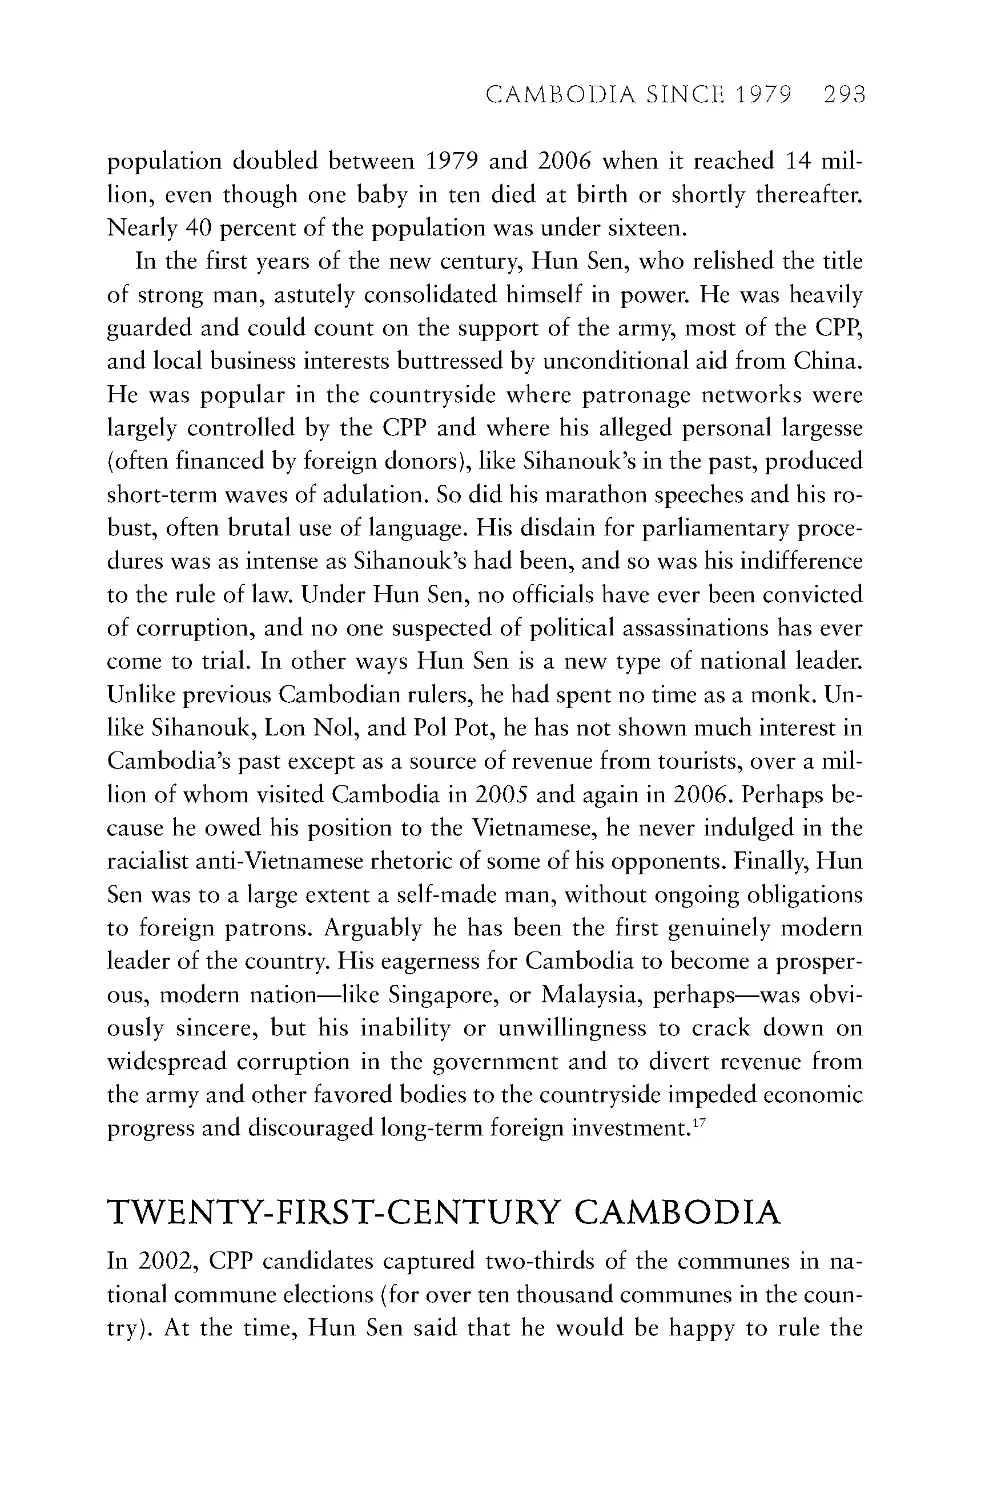 Twenty-First Century Cambodia